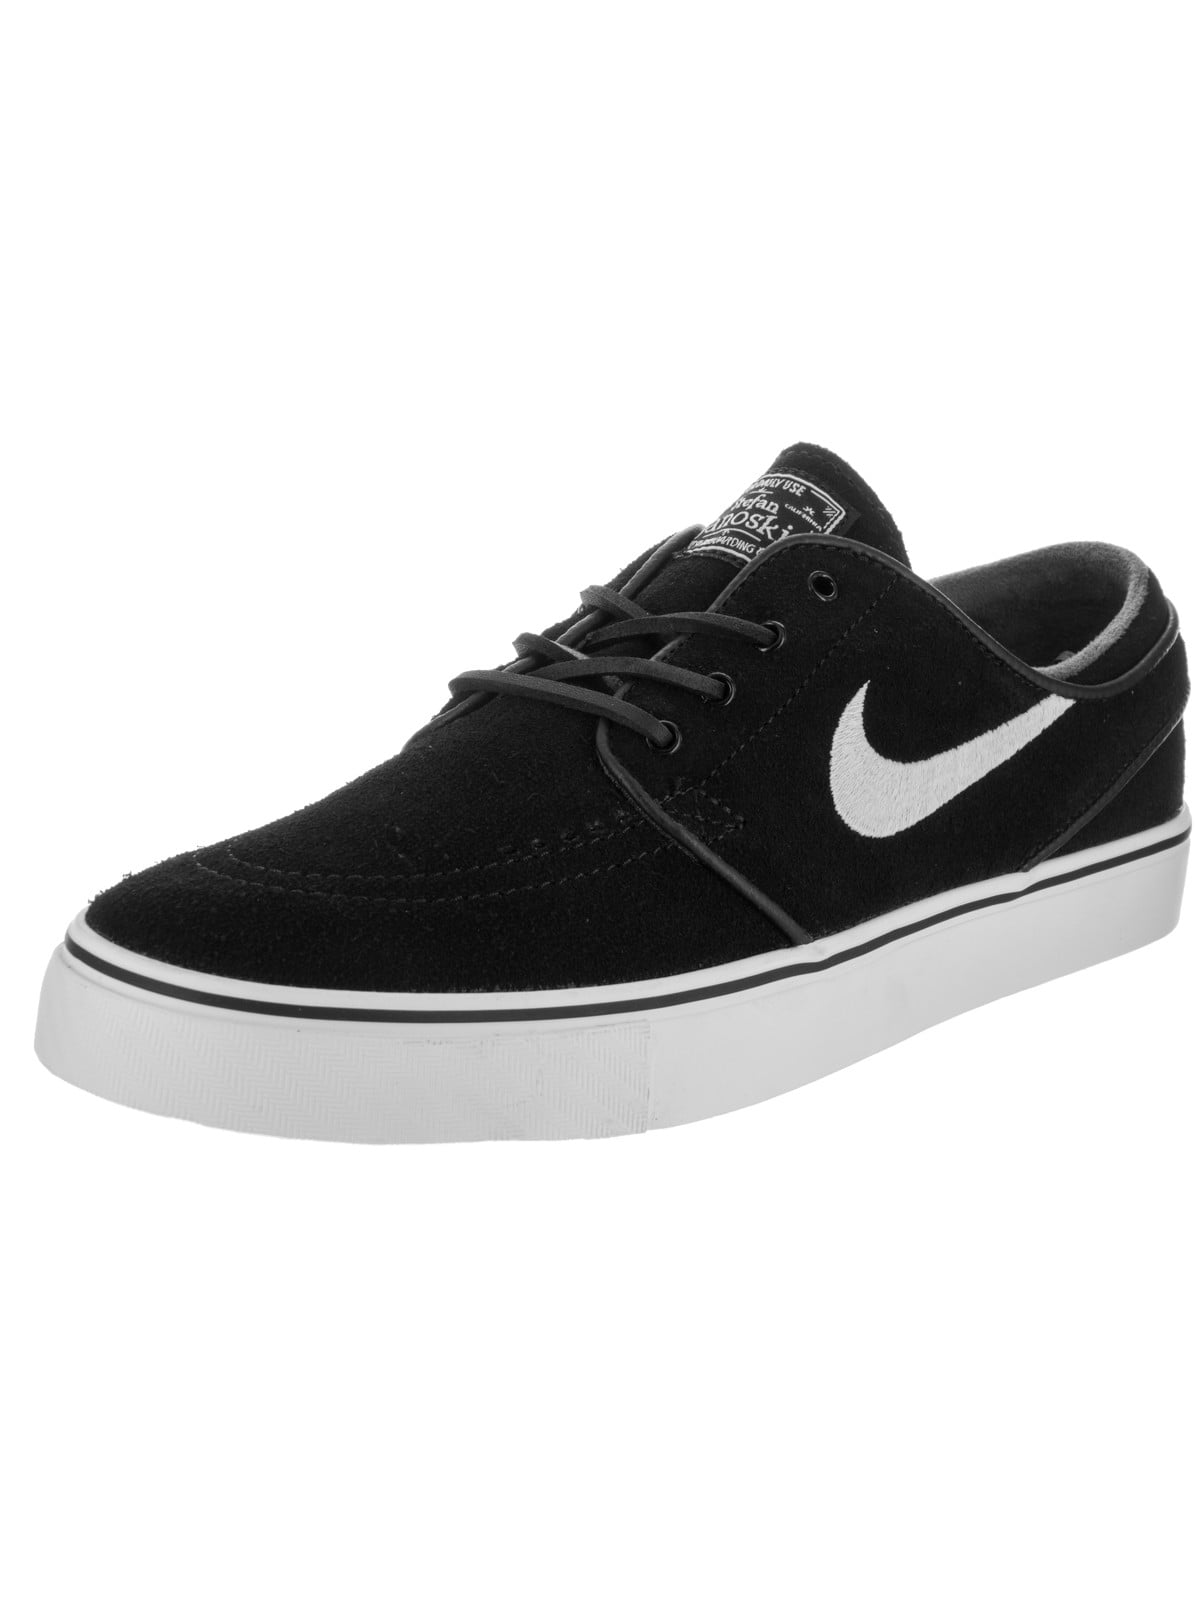 Nike SB Zoom Janoski OG (Black/White-Gum Brown) Men's Skate Shoes-10 Walmart.com